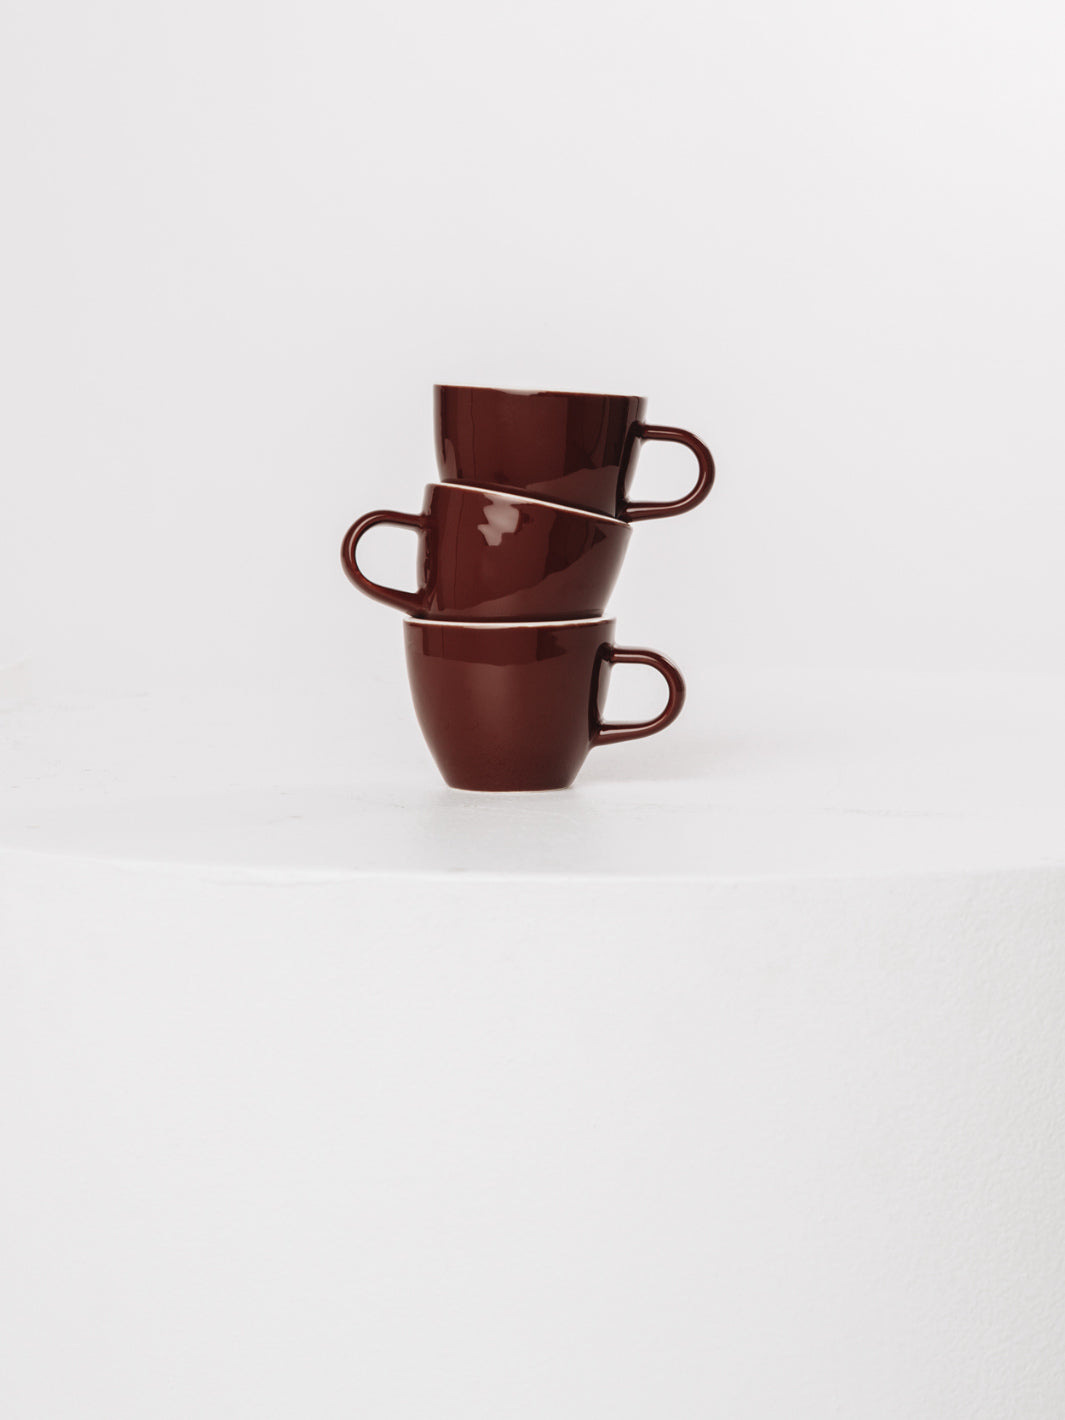 ACME Espresso Demitasse Cup (70ml/2.40oz)